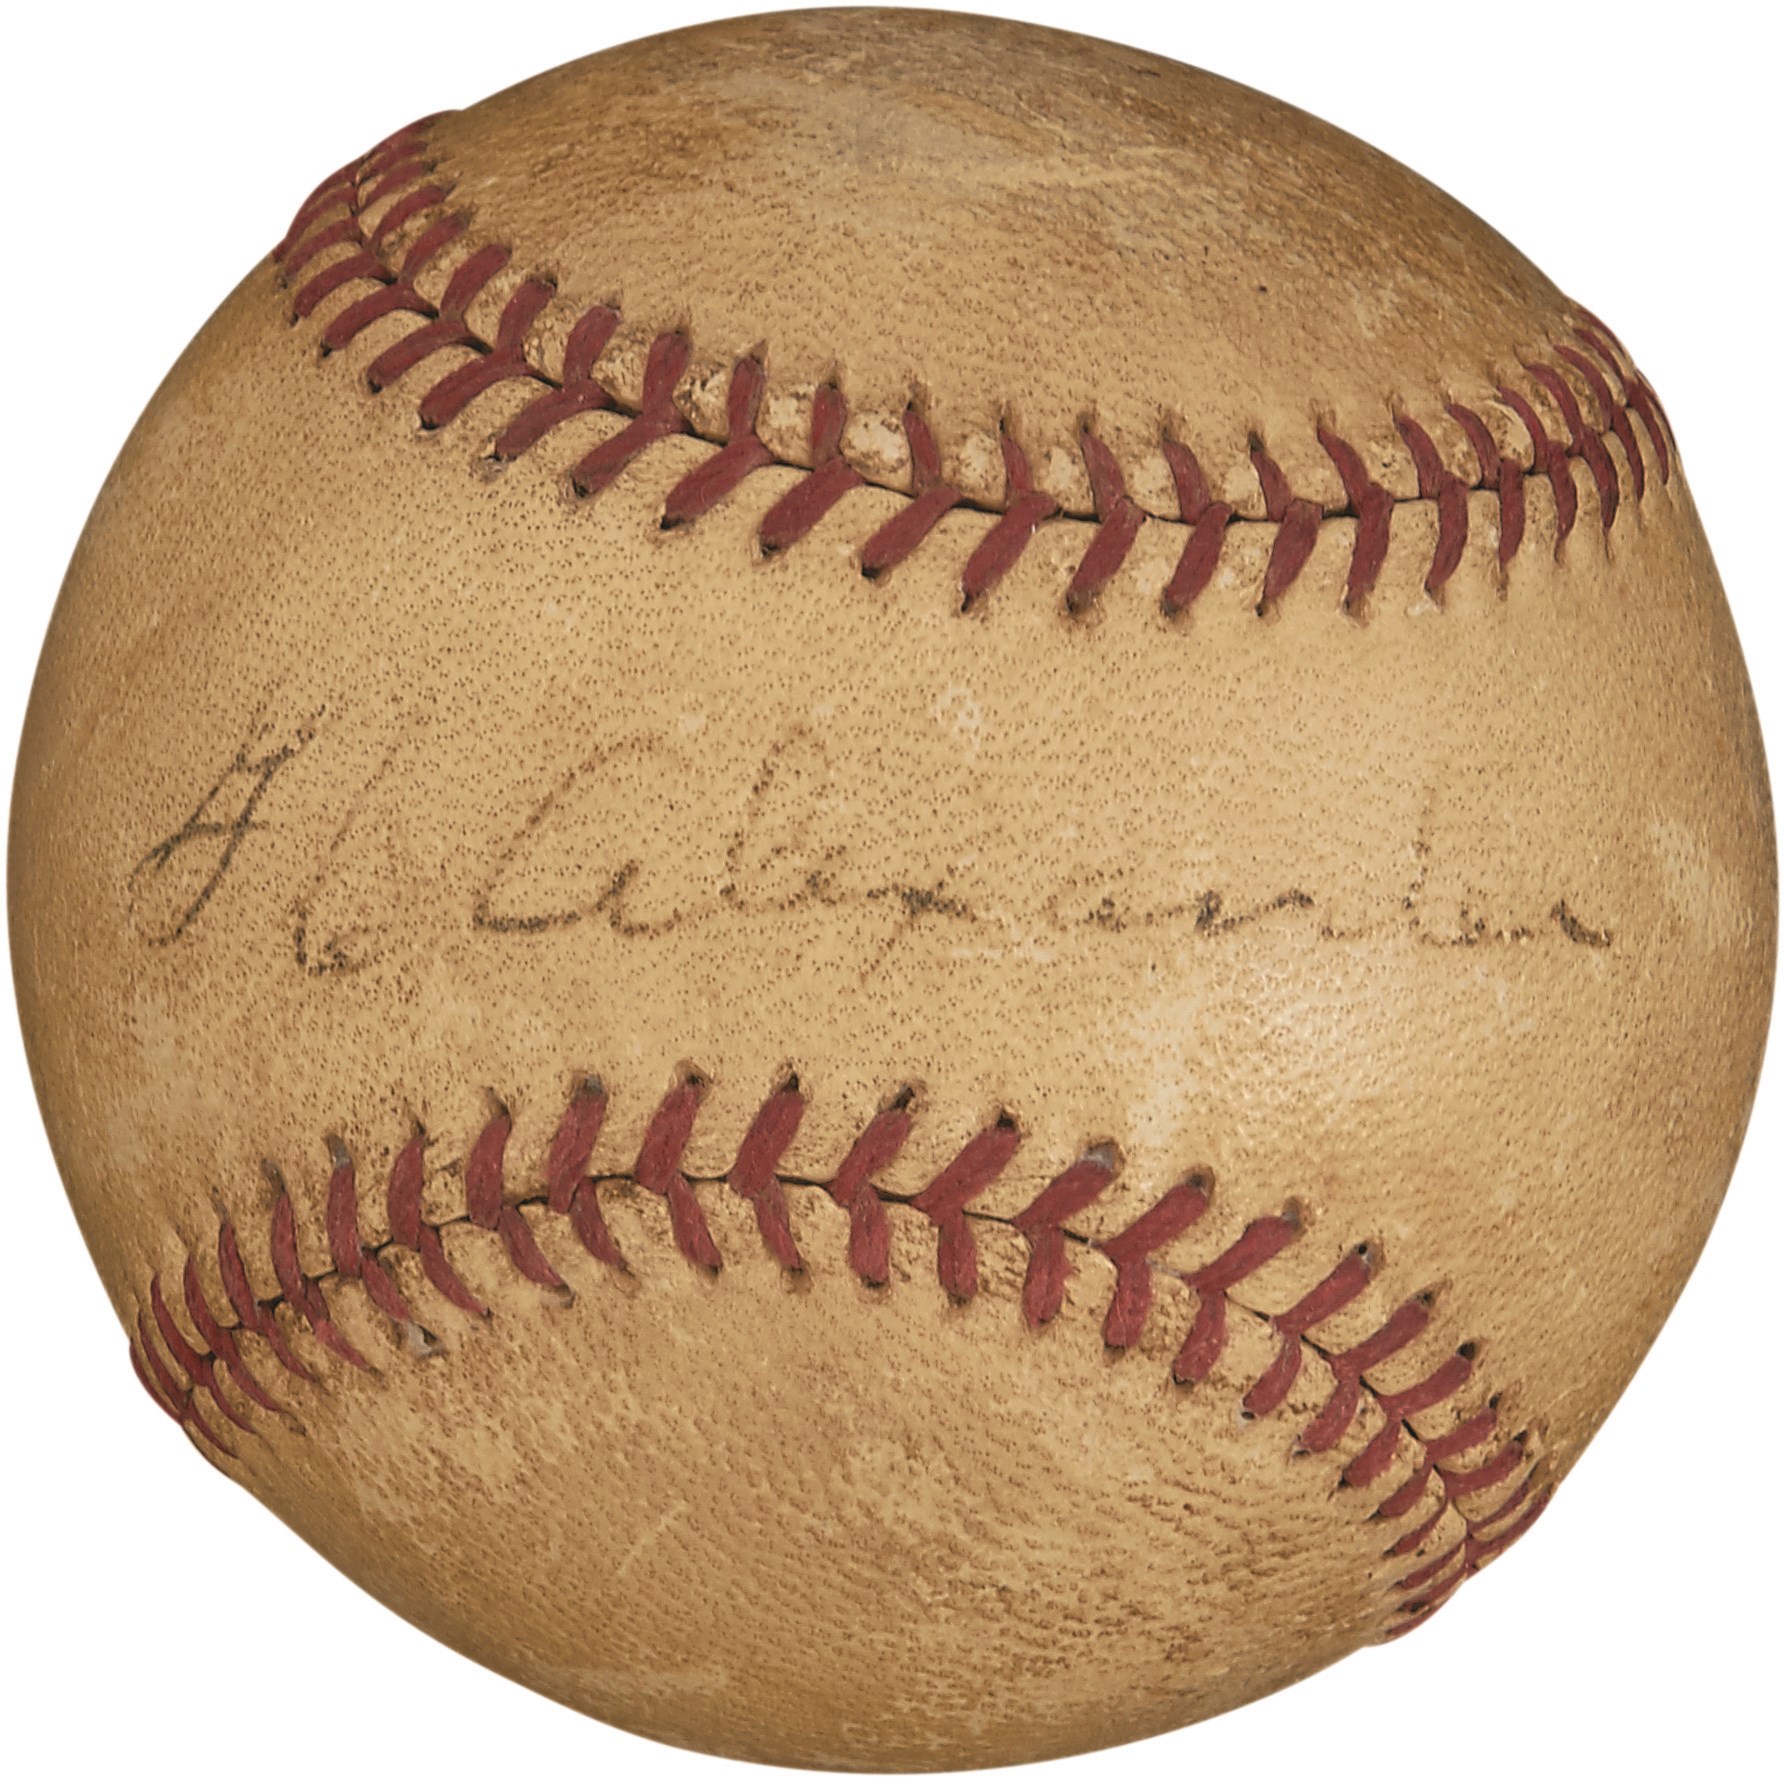 Grover Cleveland Alexander Single-Signed Baseball (PSA)